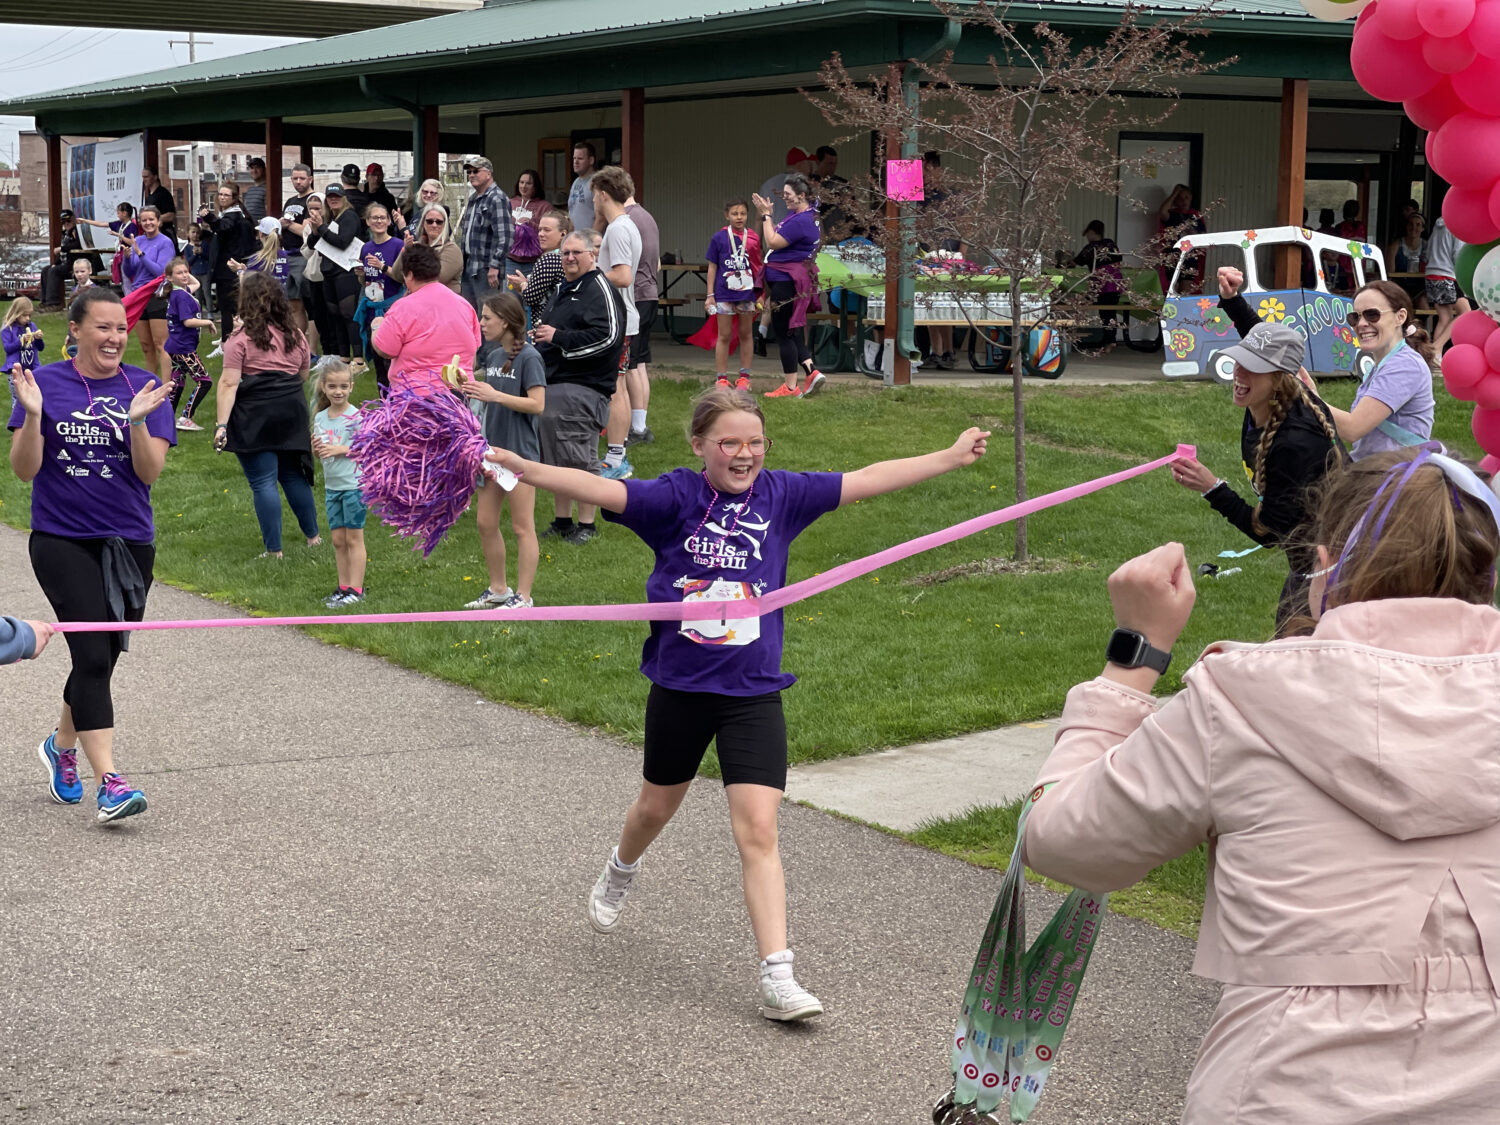 Girls on the Run Celebratory 5K Community Fun Run empowers young girls